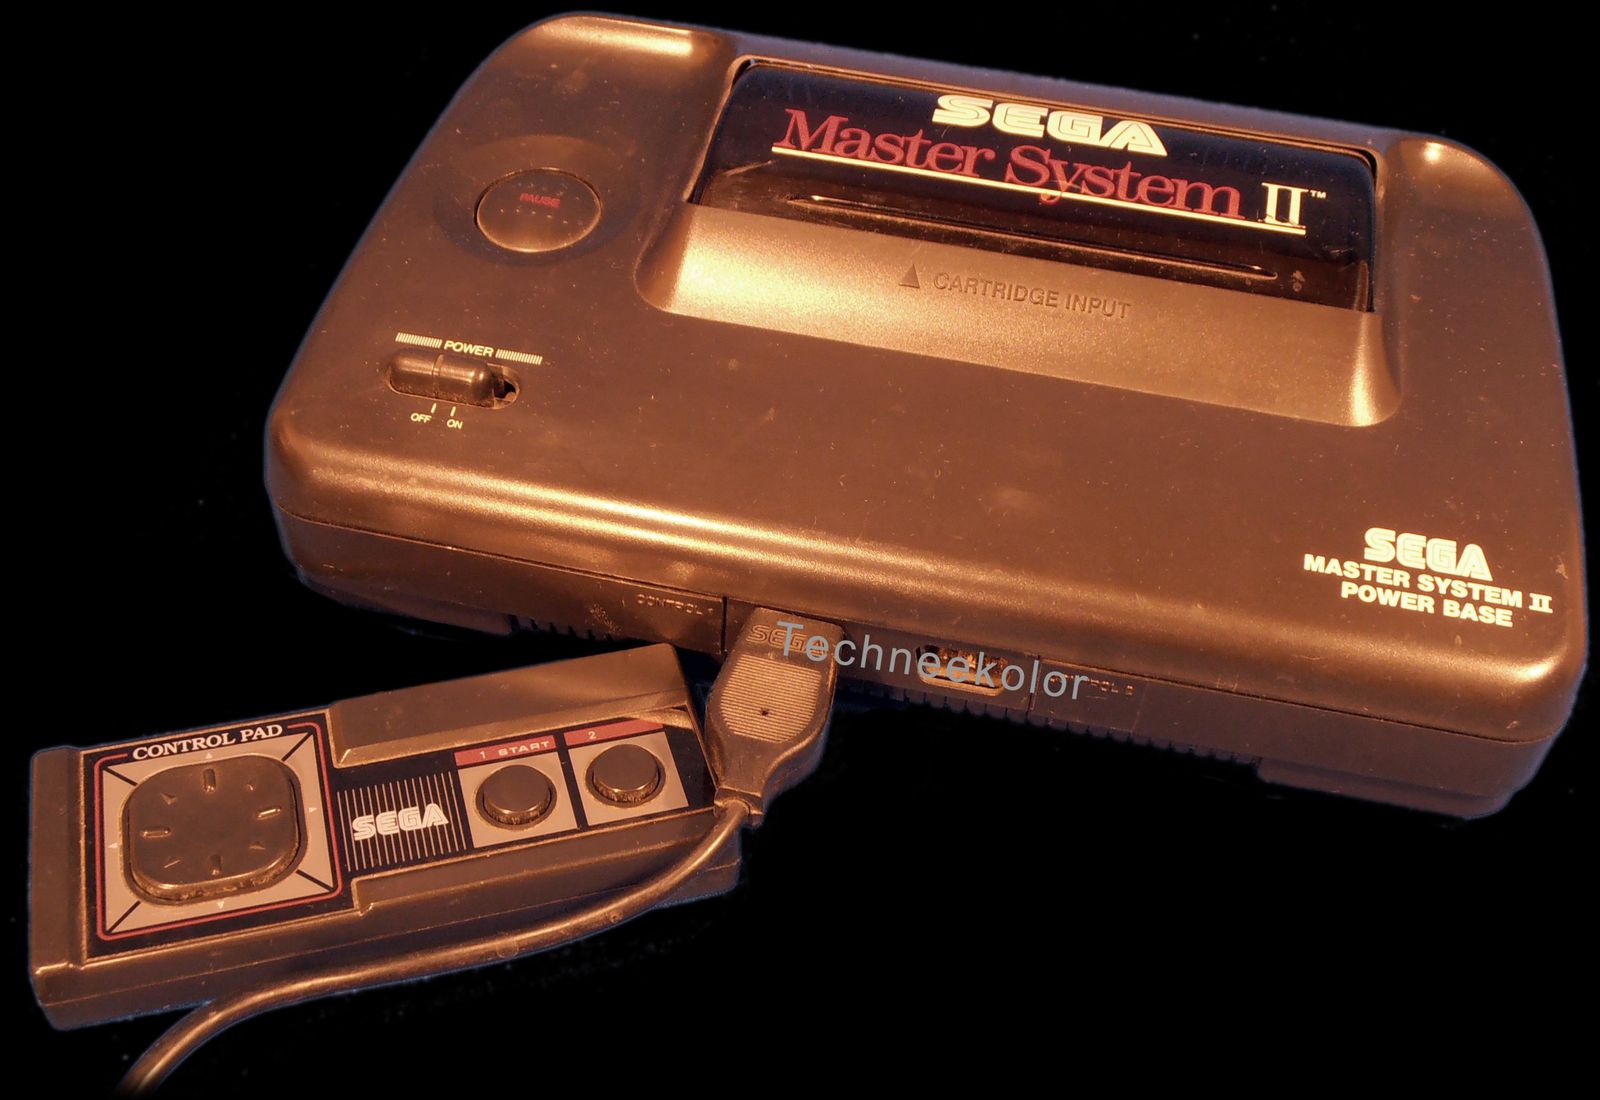 Sega mastersystem II 1990